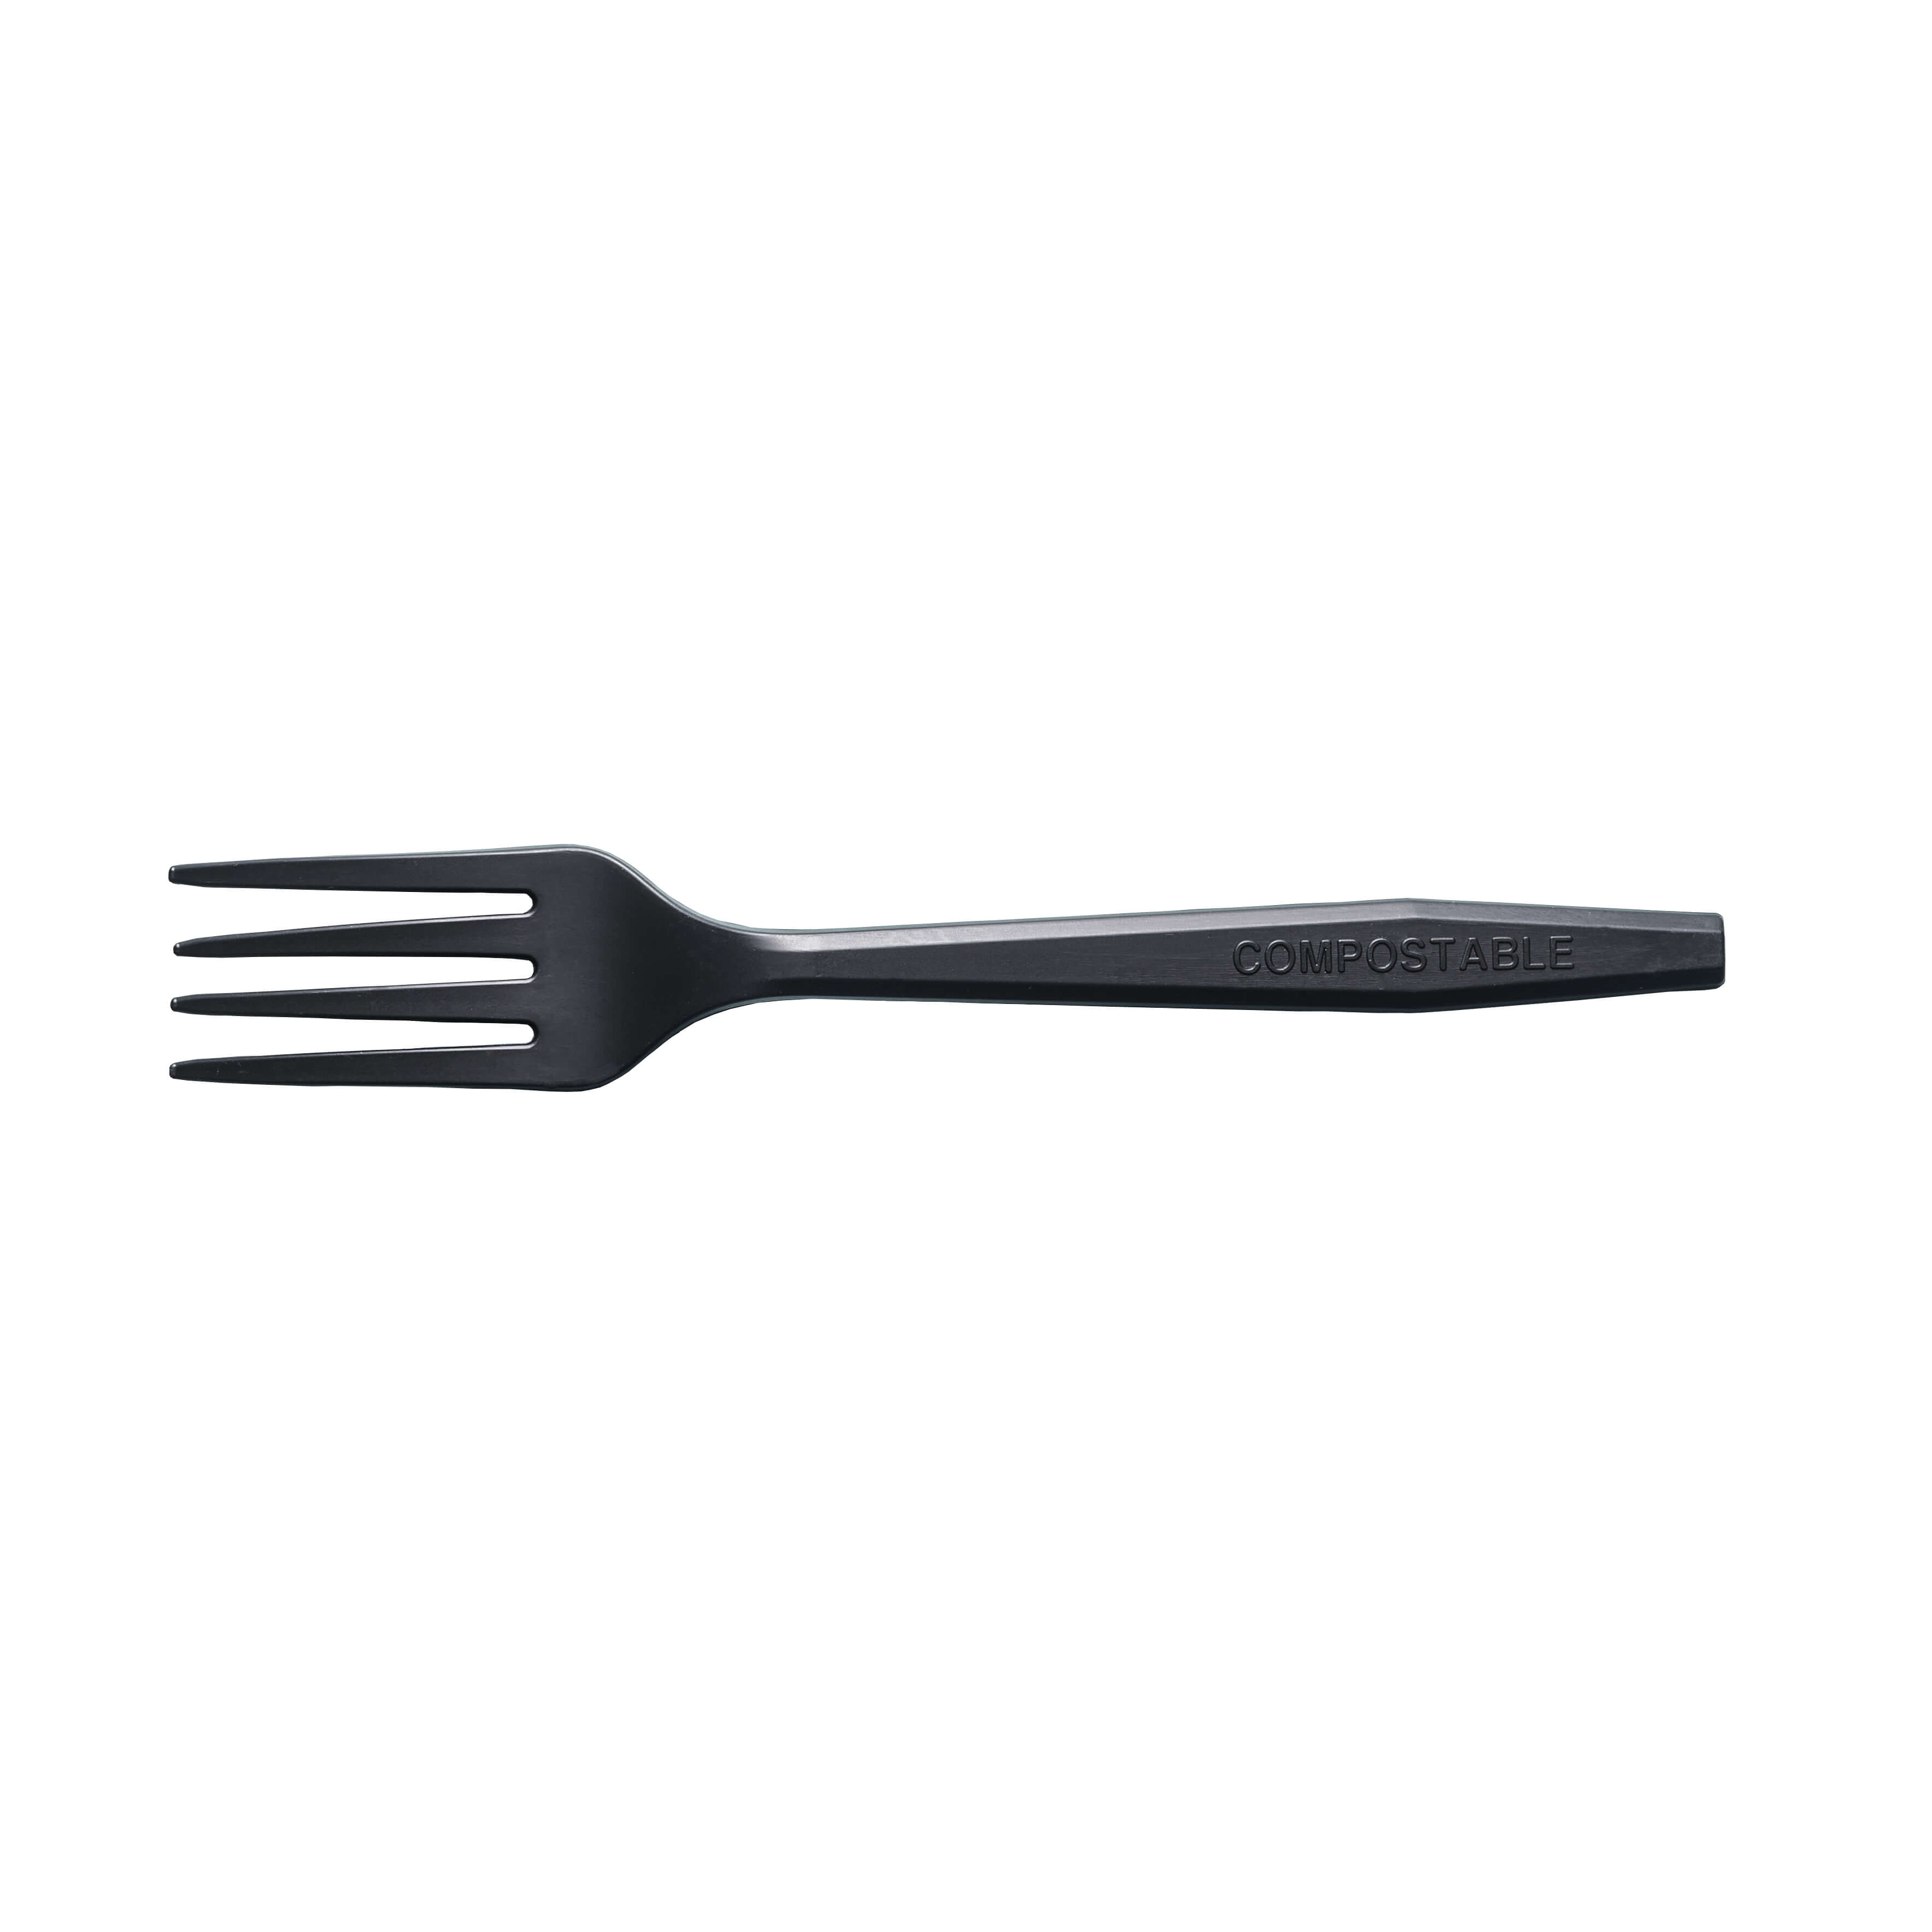 Premium Series CPLA fork